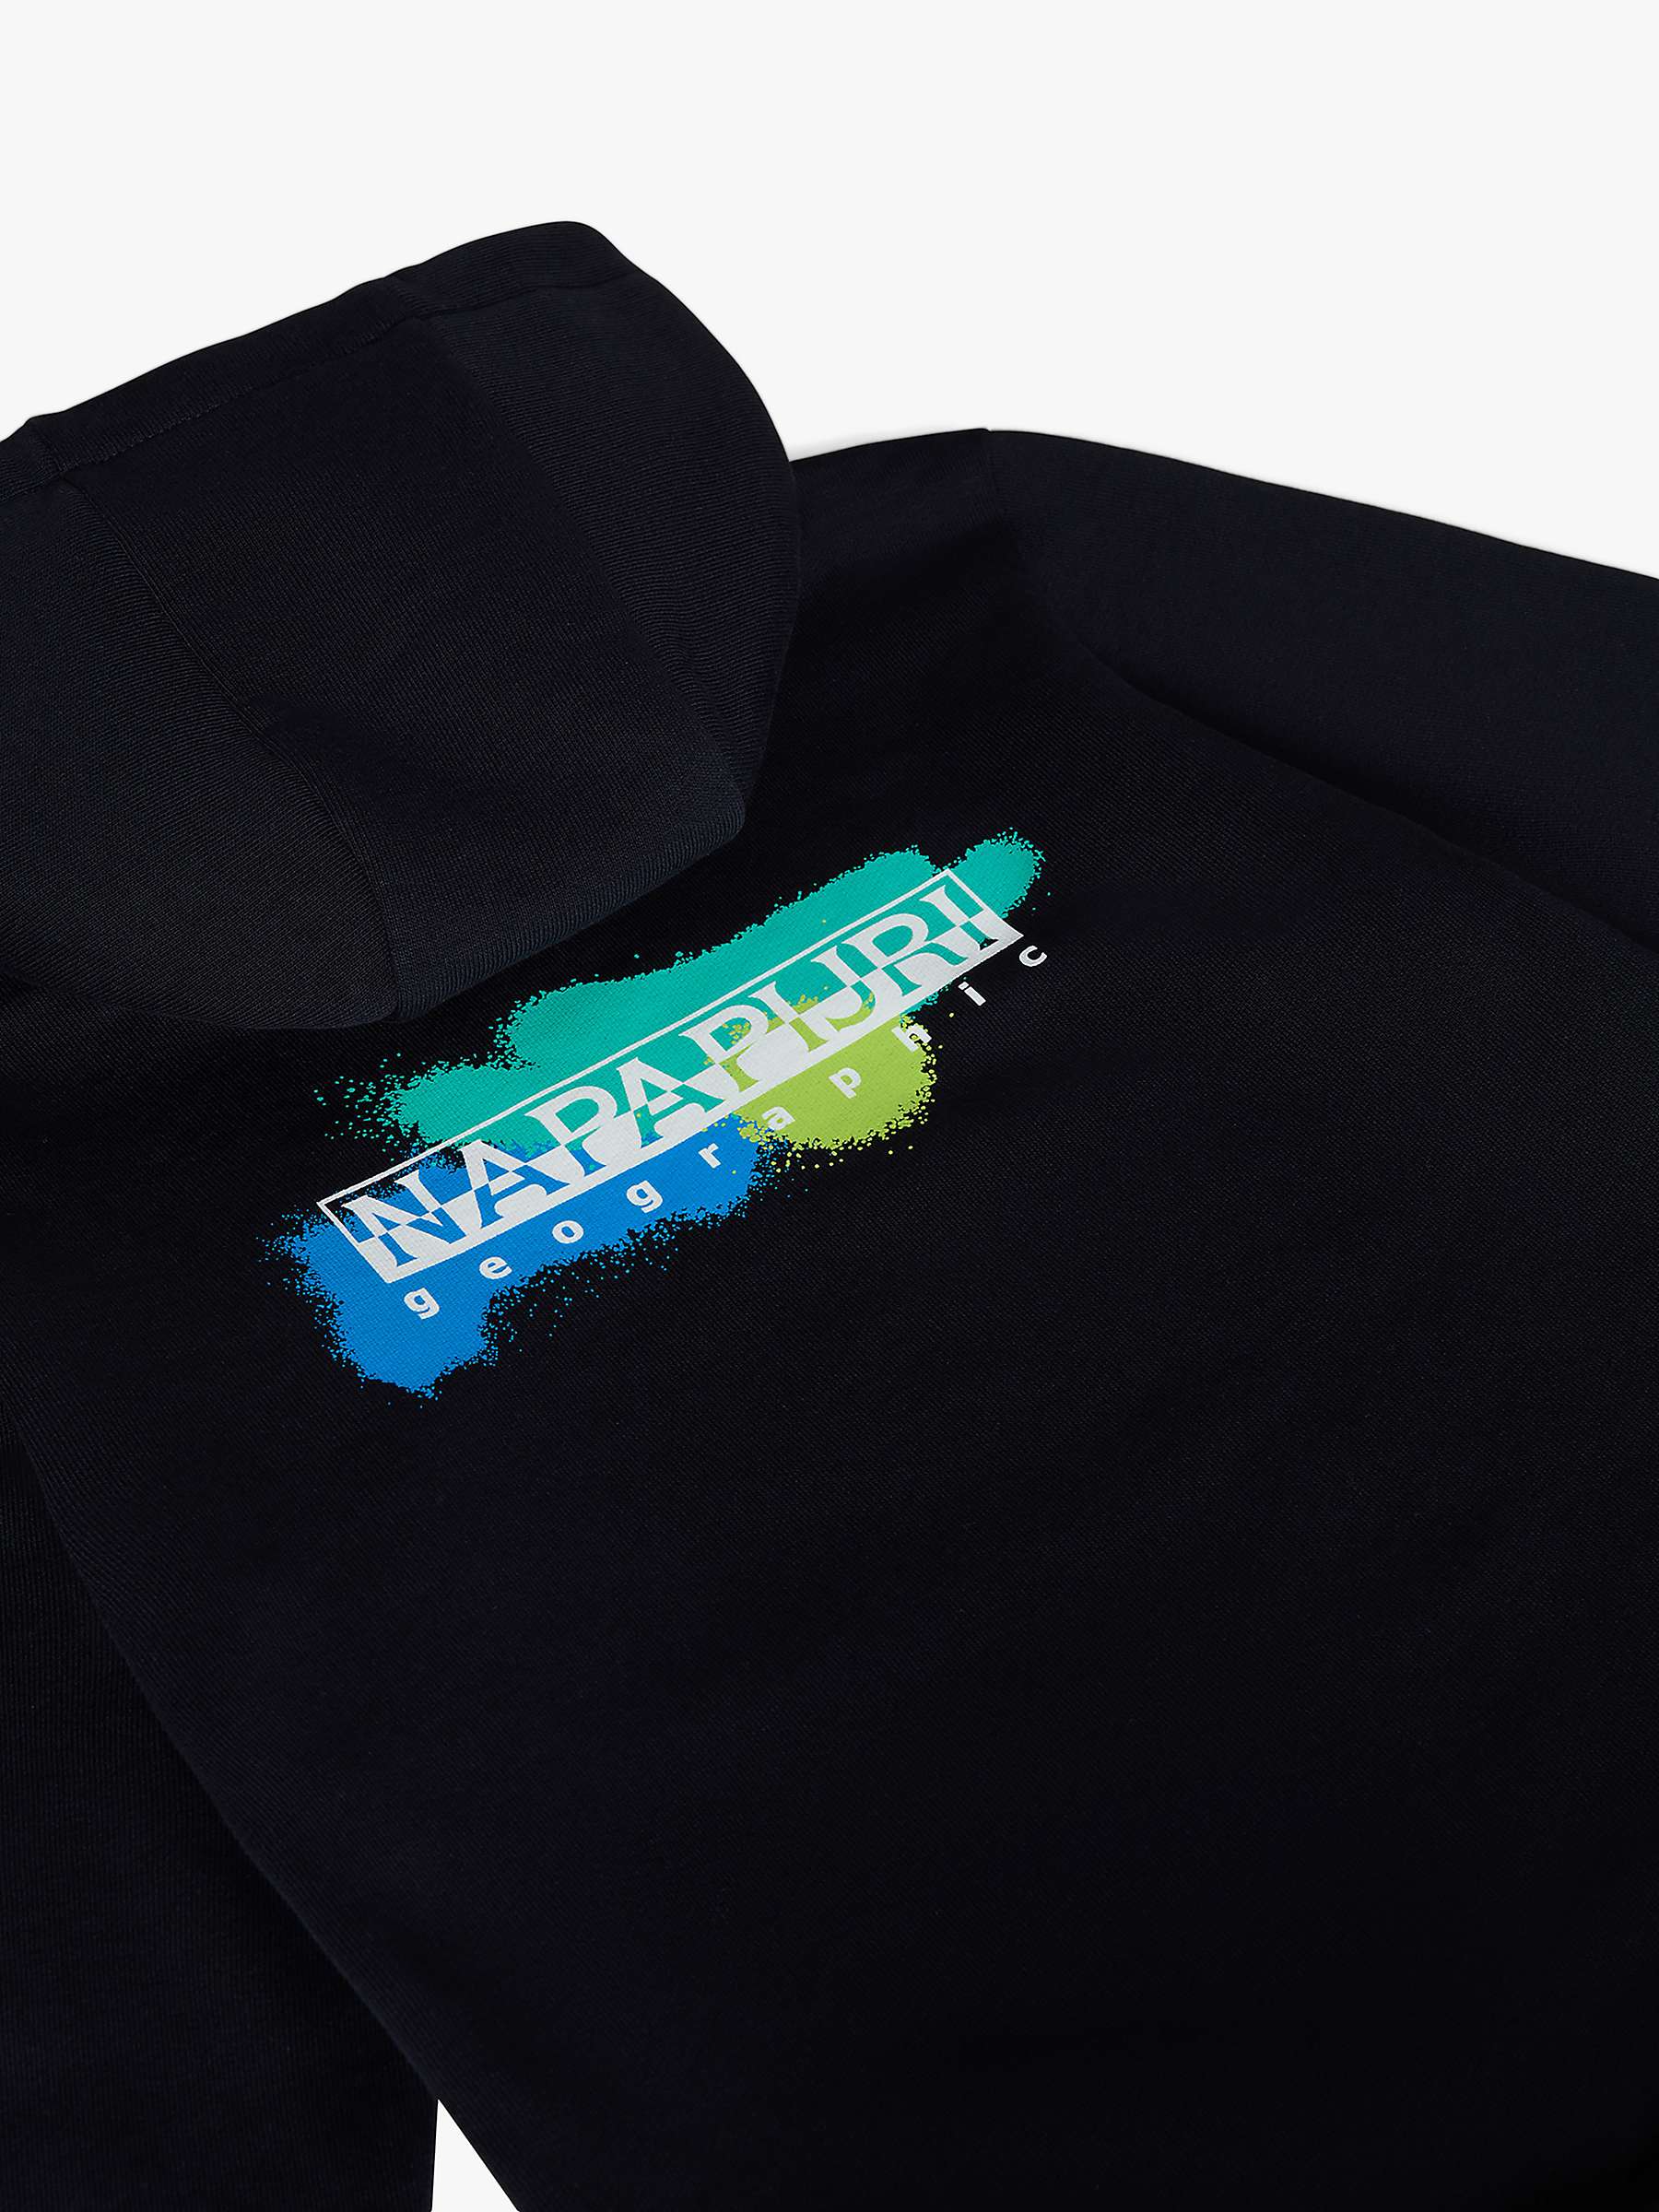 Buy Napapijri Kids' Liard Mountain Graphic Hoodie, Black/Multi Online at johnlewis.com